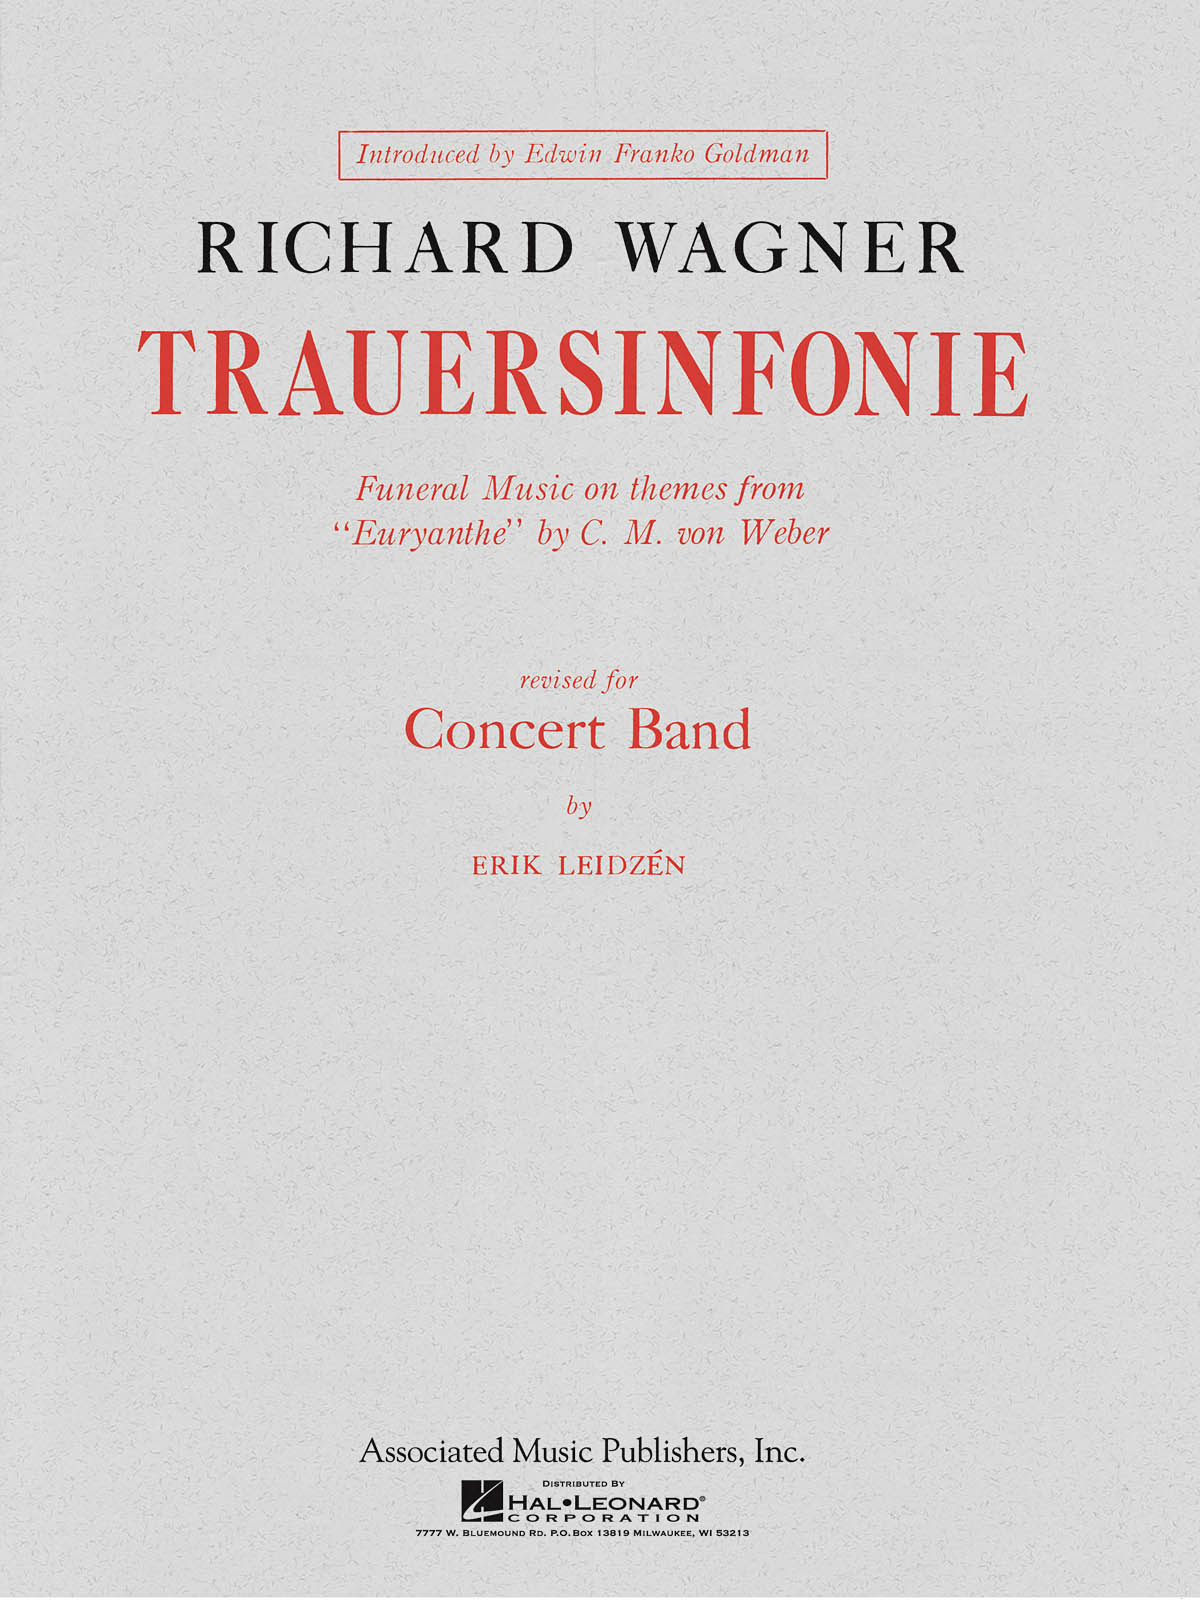 Richard Wagner: Trauersinfonie: Concert Band